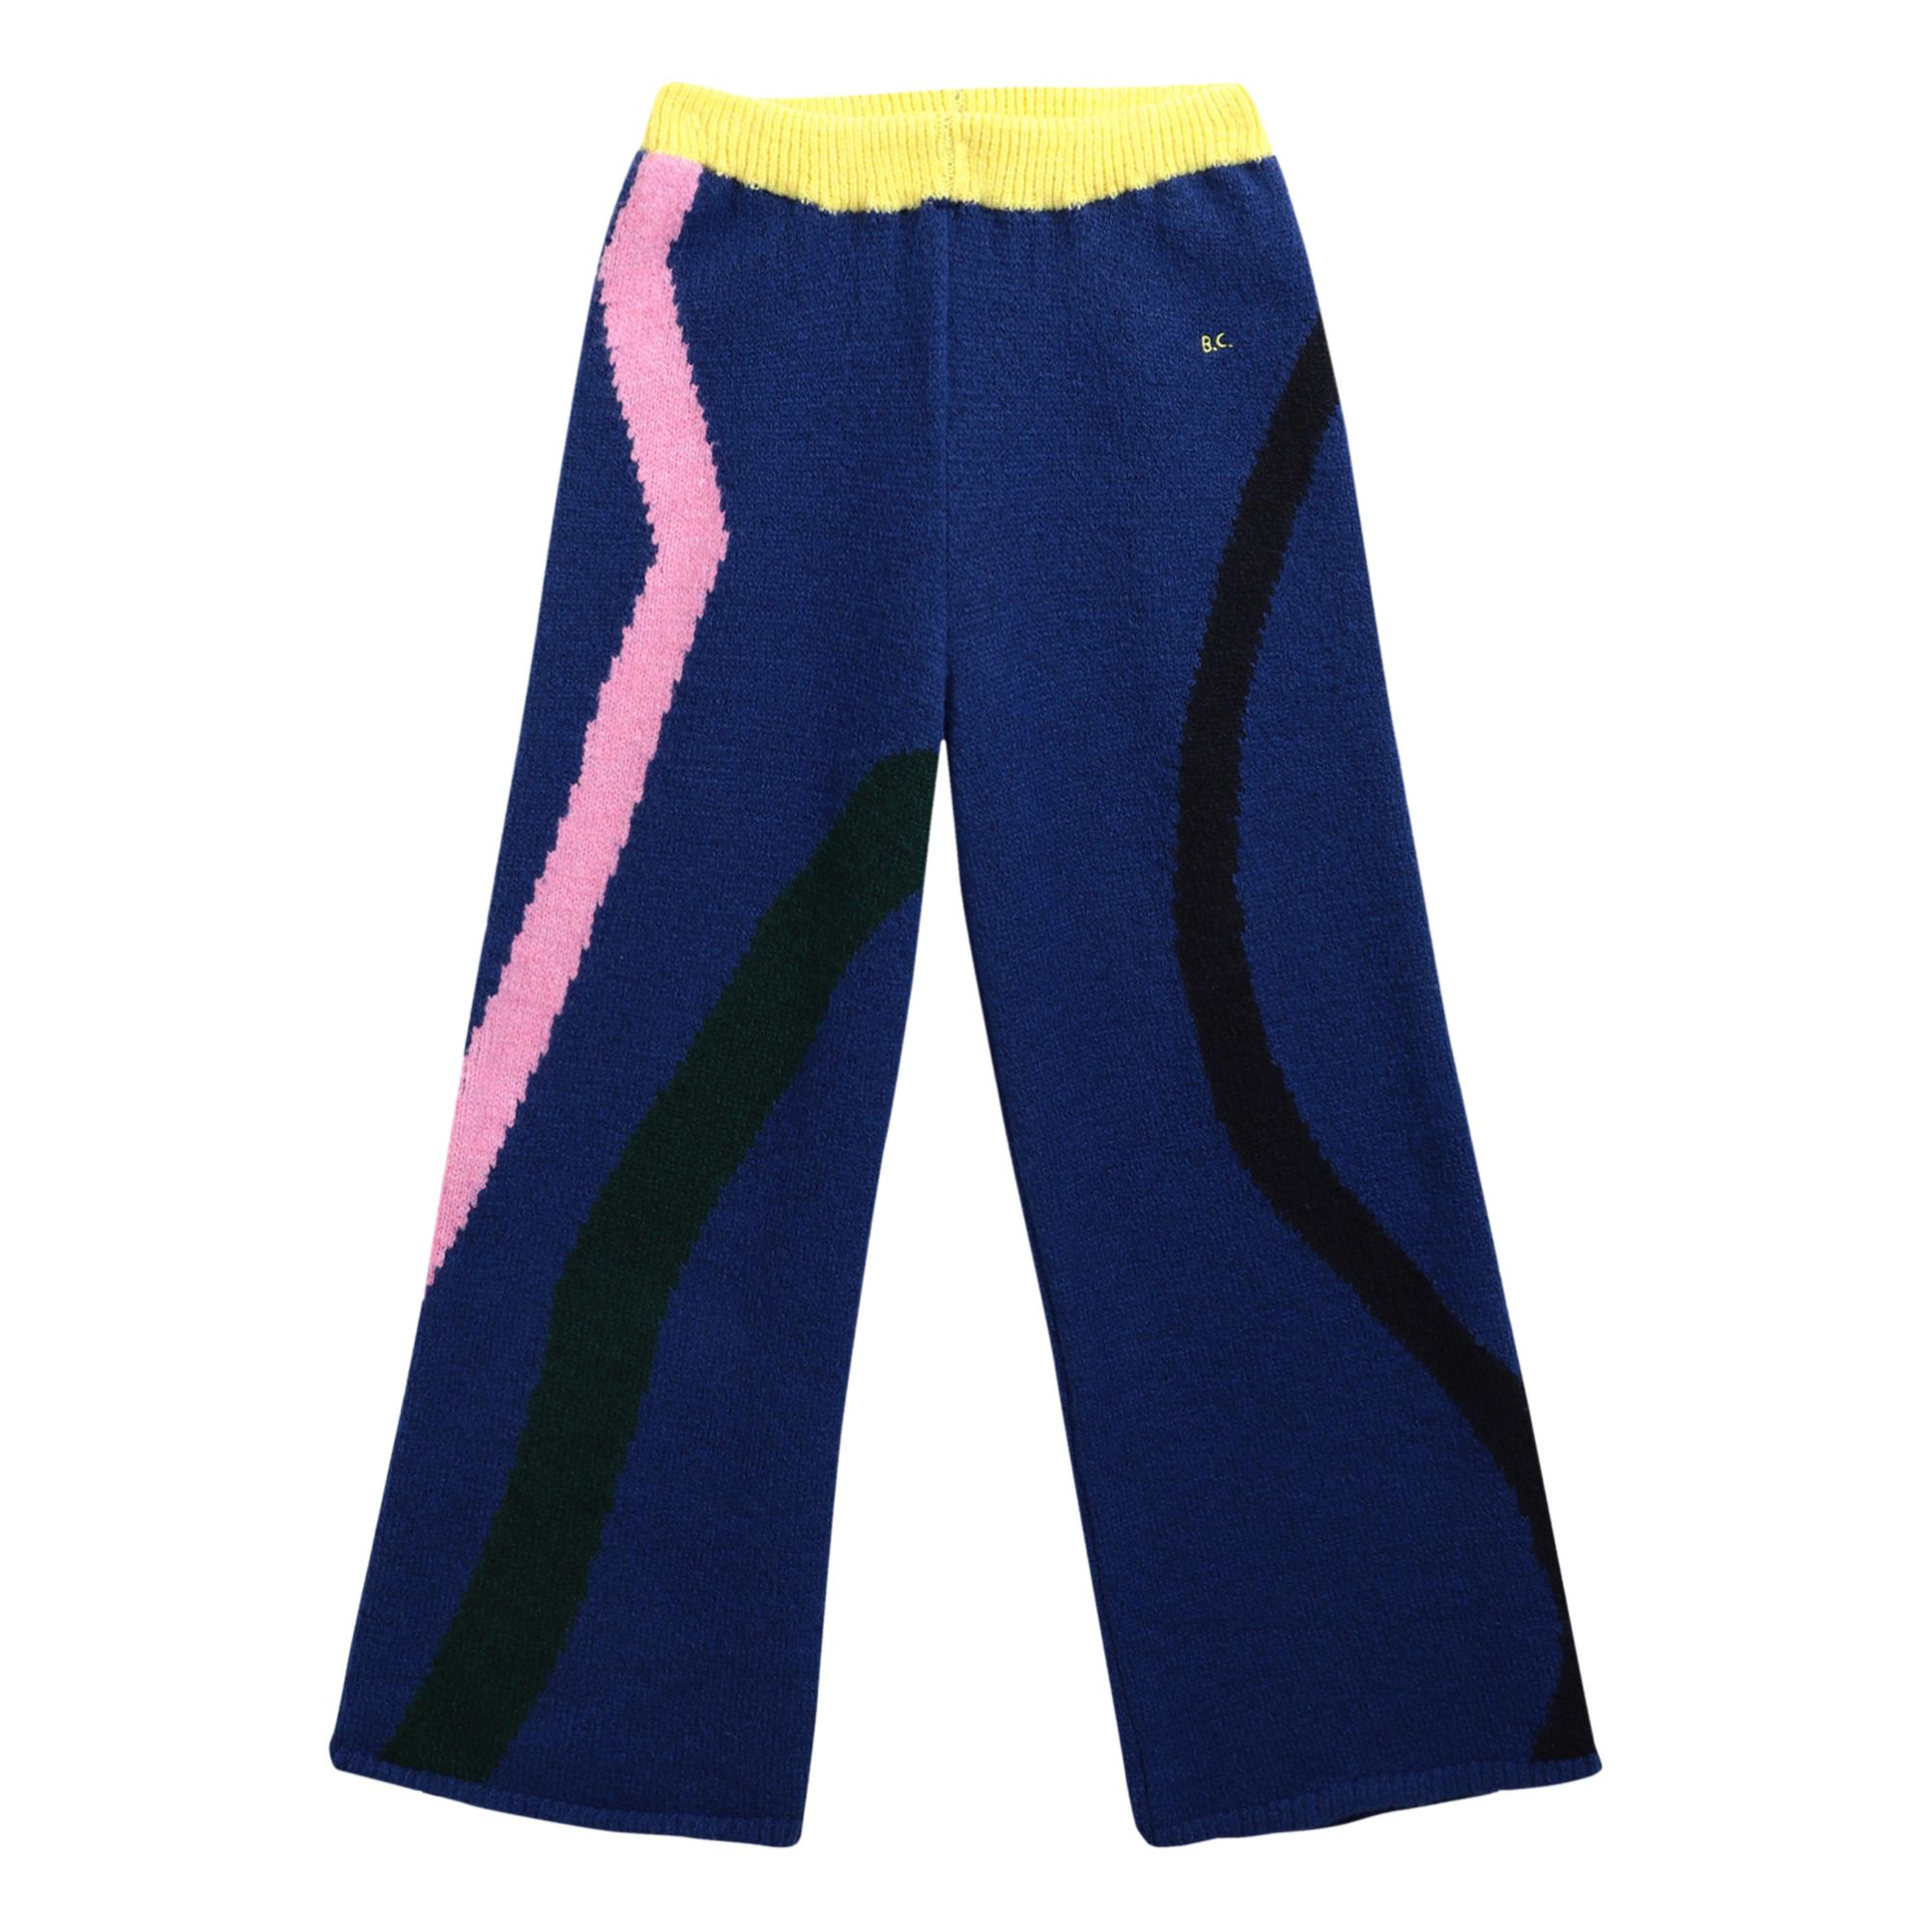 Bobo Choses - Pantalon Large Tricot - Collection Femme - - Bleu